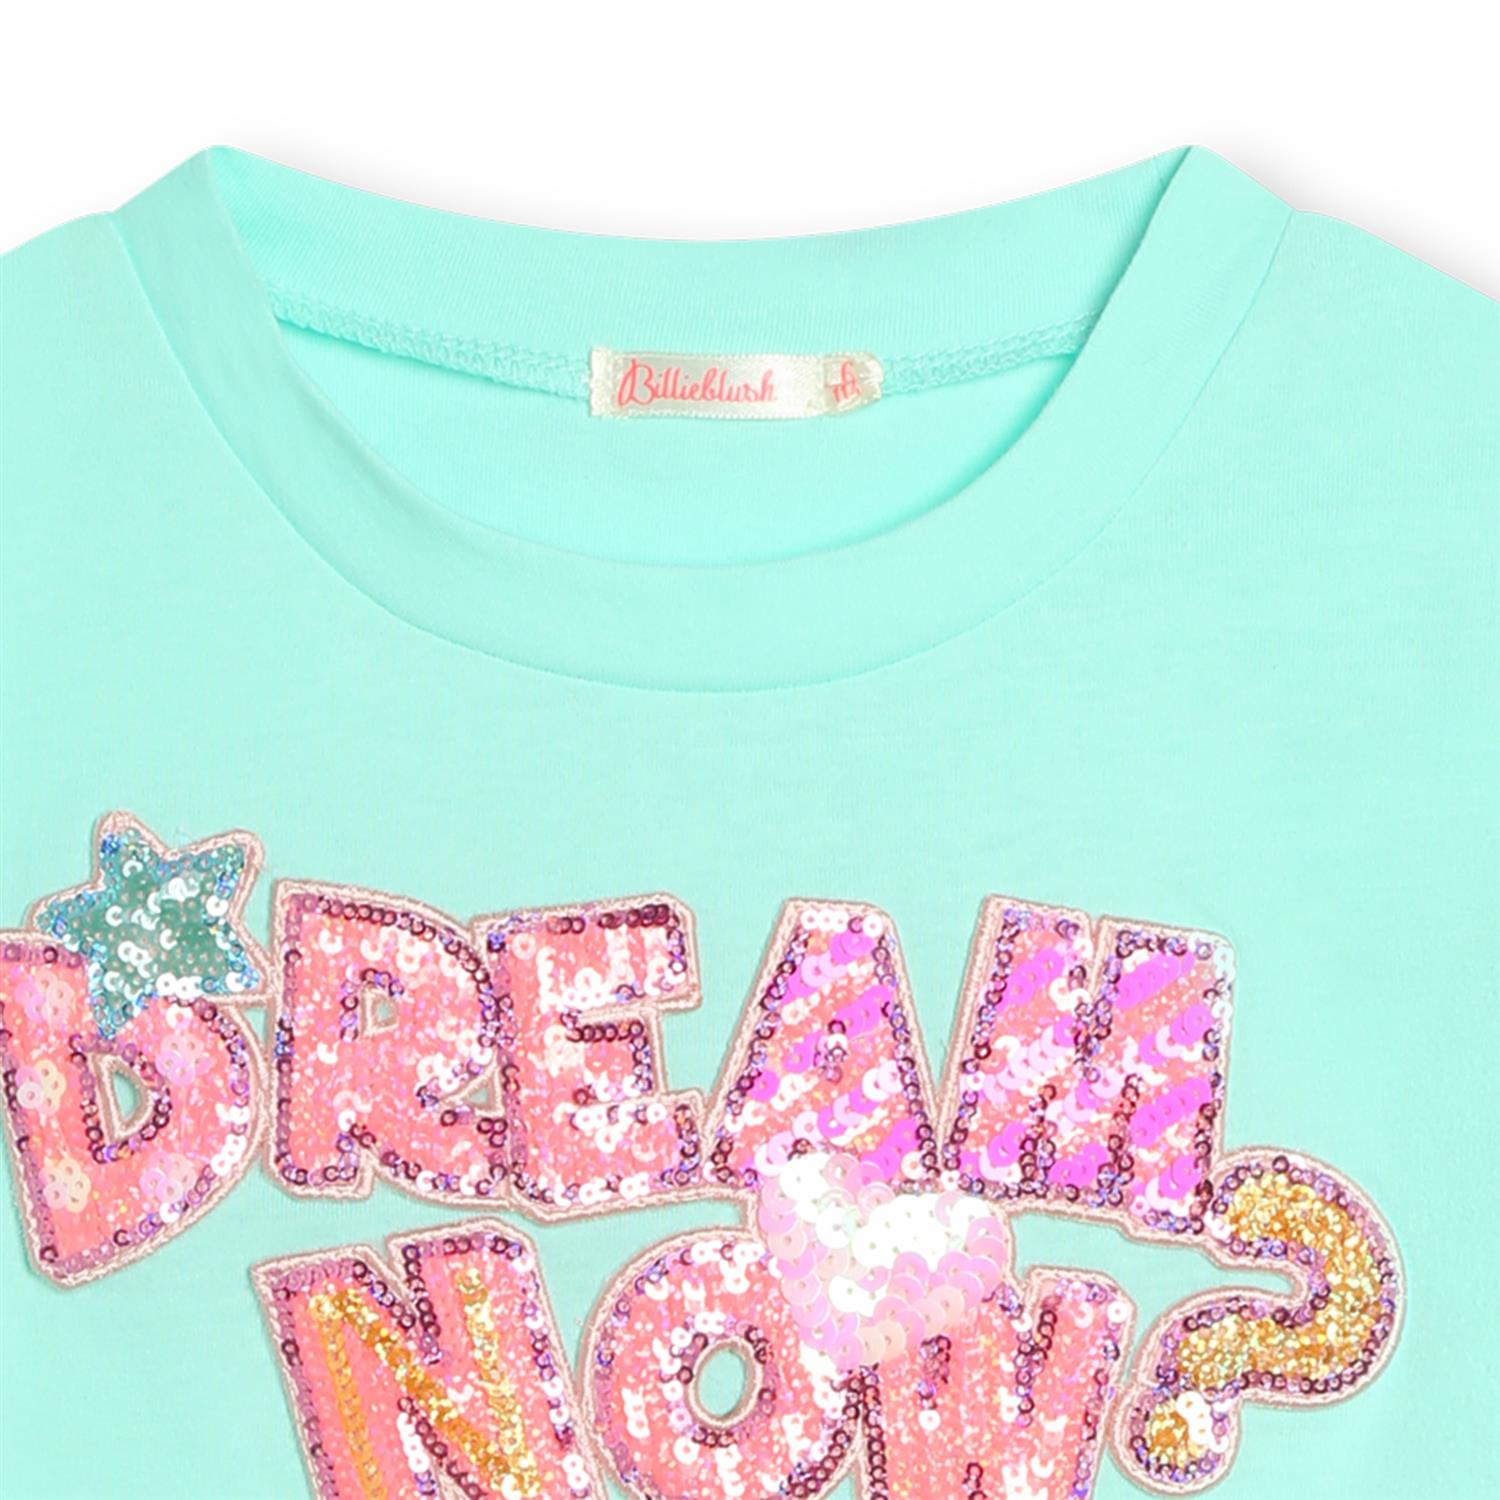 BILLIEBLUSH T-shirt,Dream Now Mint